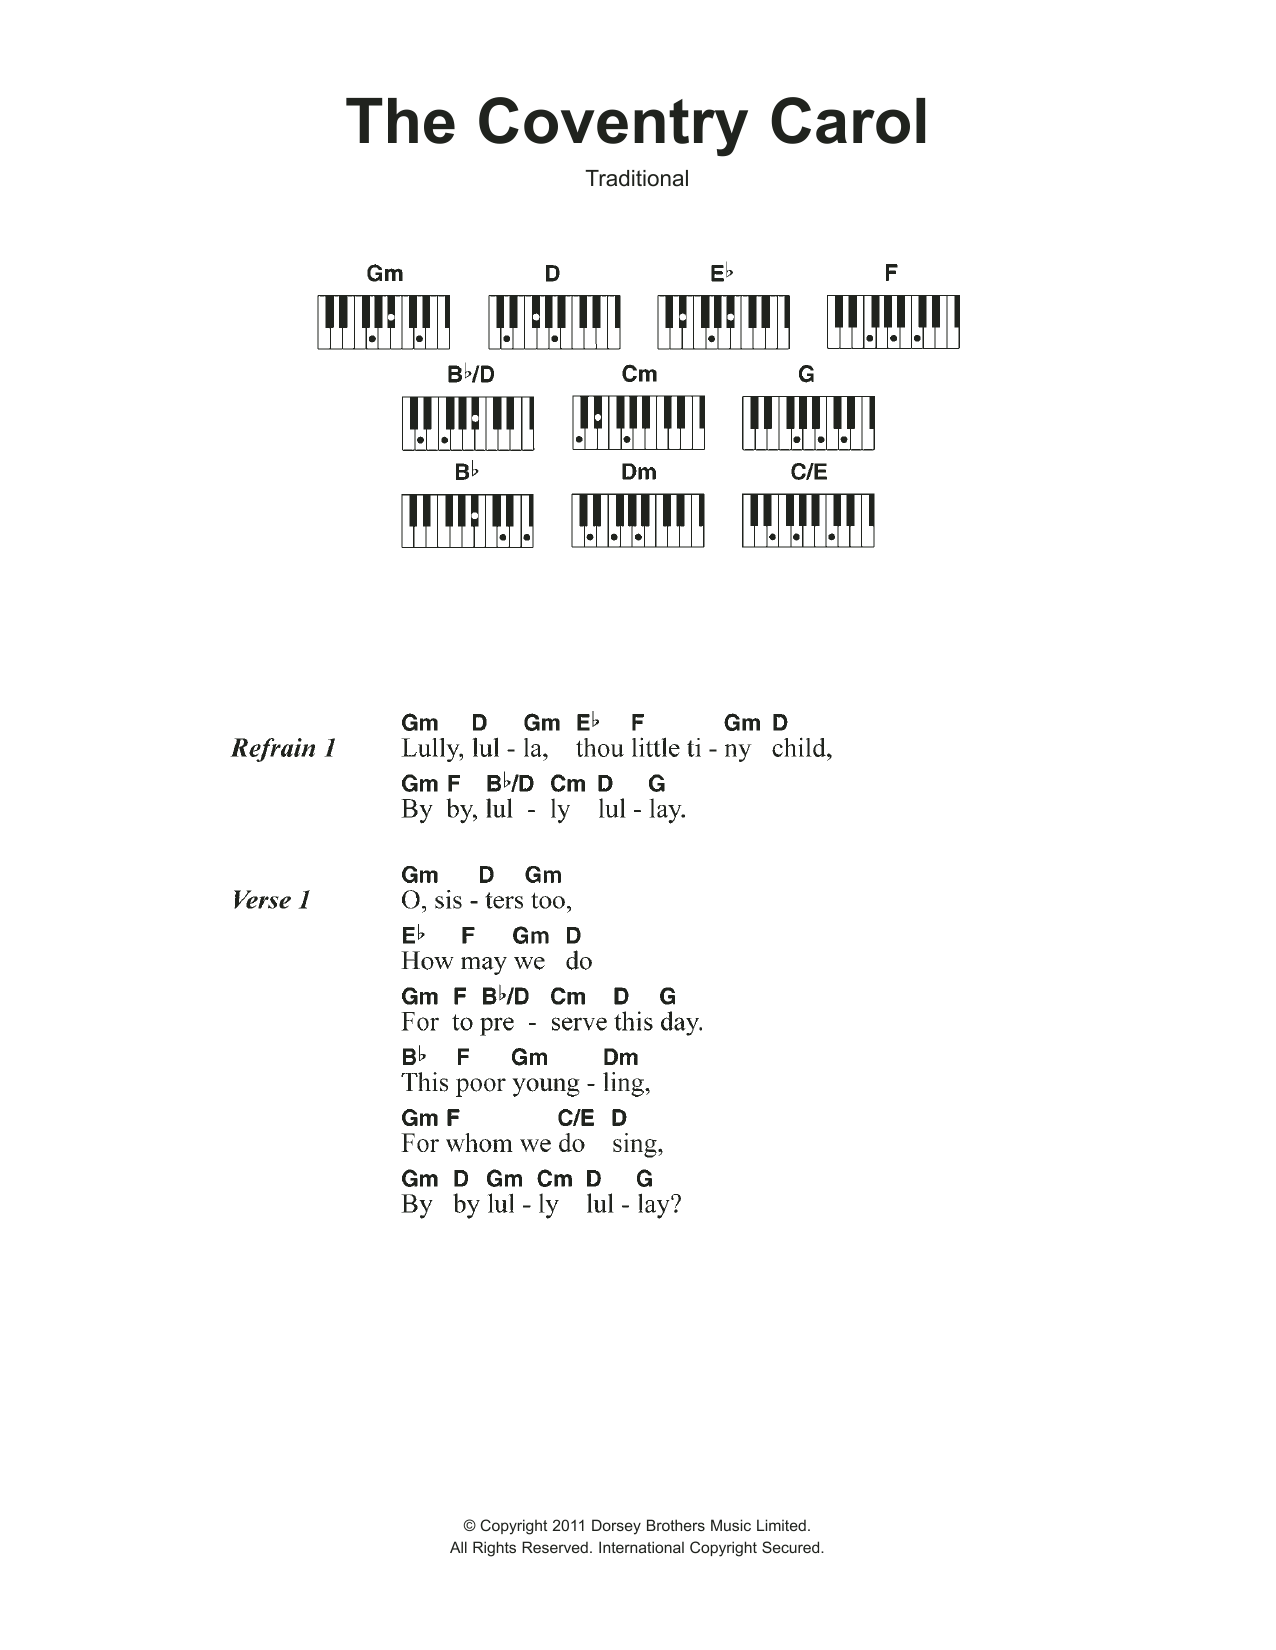 Christmas Carol Coventry Carol Sheet Music Notes & Chords for Lyrics & Chords - Download or Print PDF